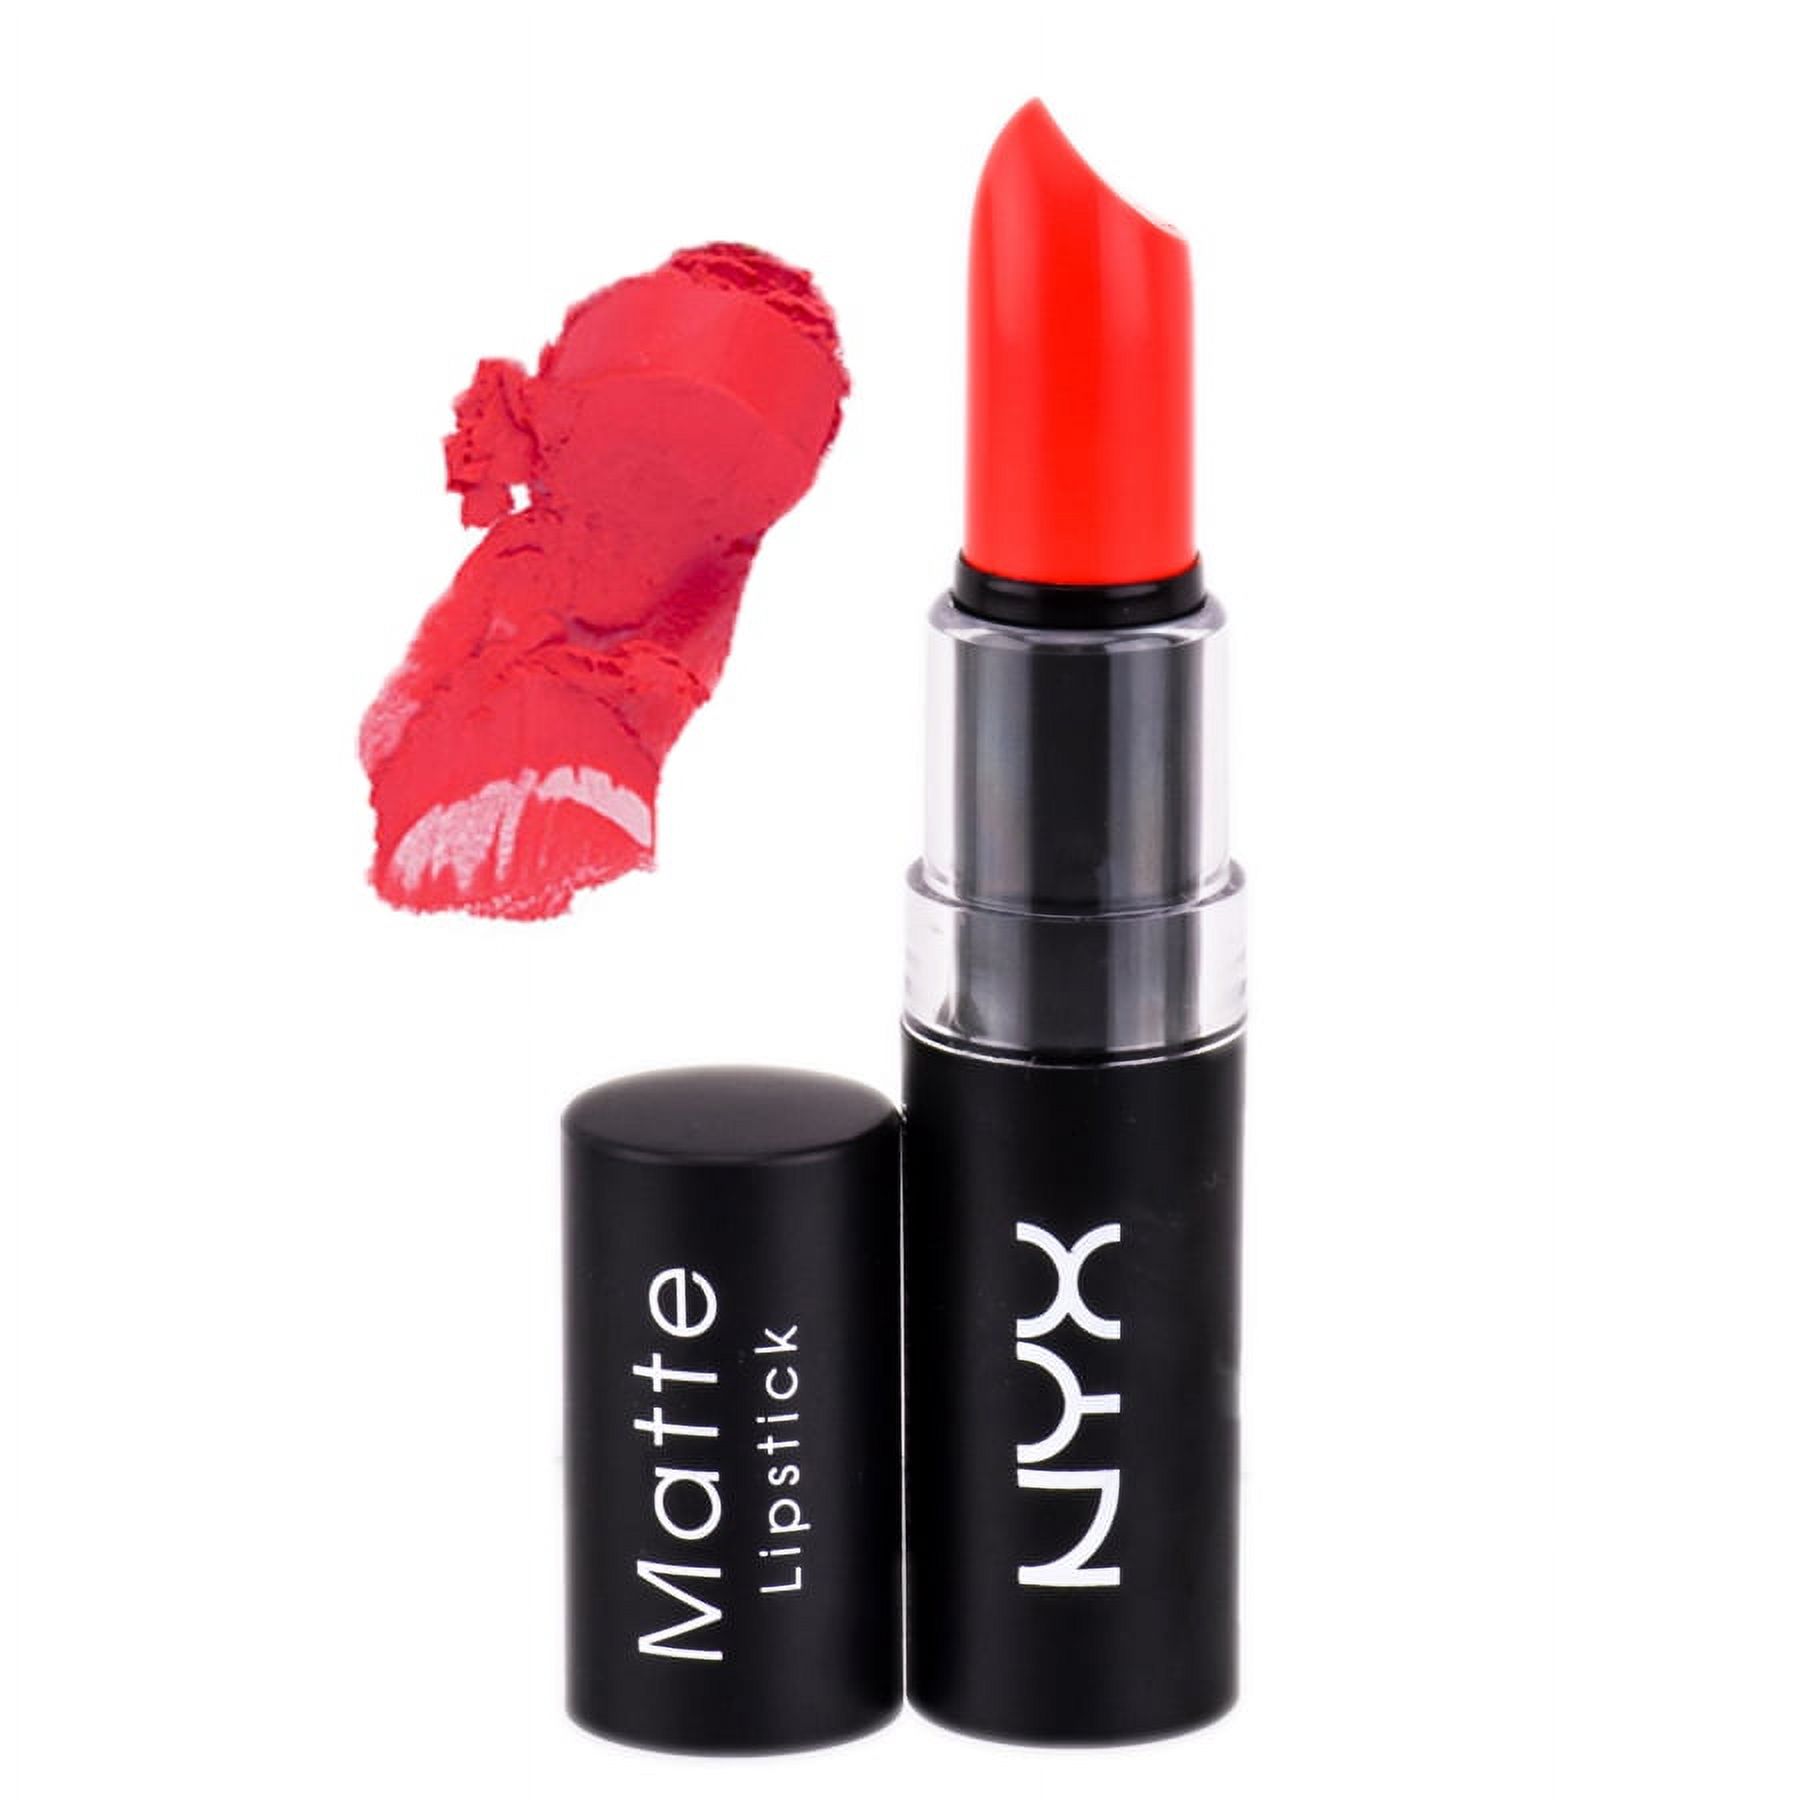 NYX Matte Lipstick - Indie Flick - image 1 of 11